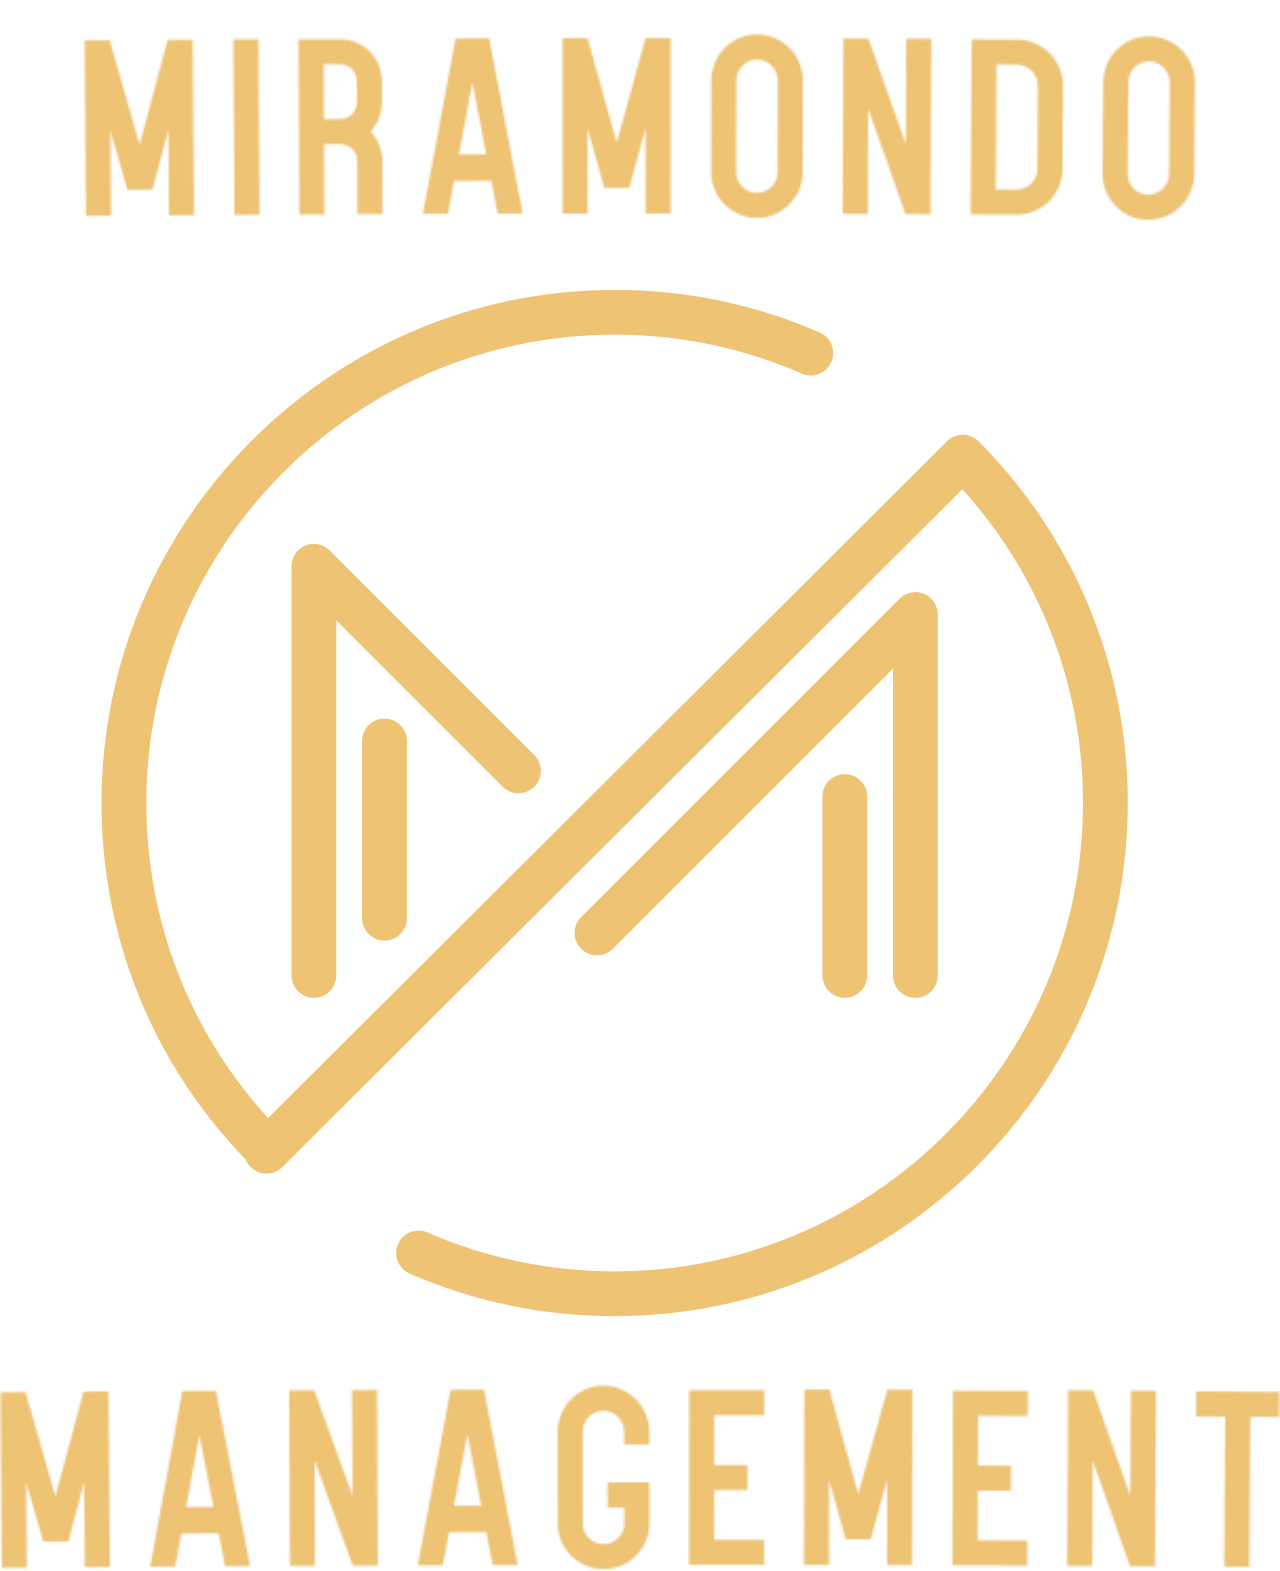 MiraMondo's web page